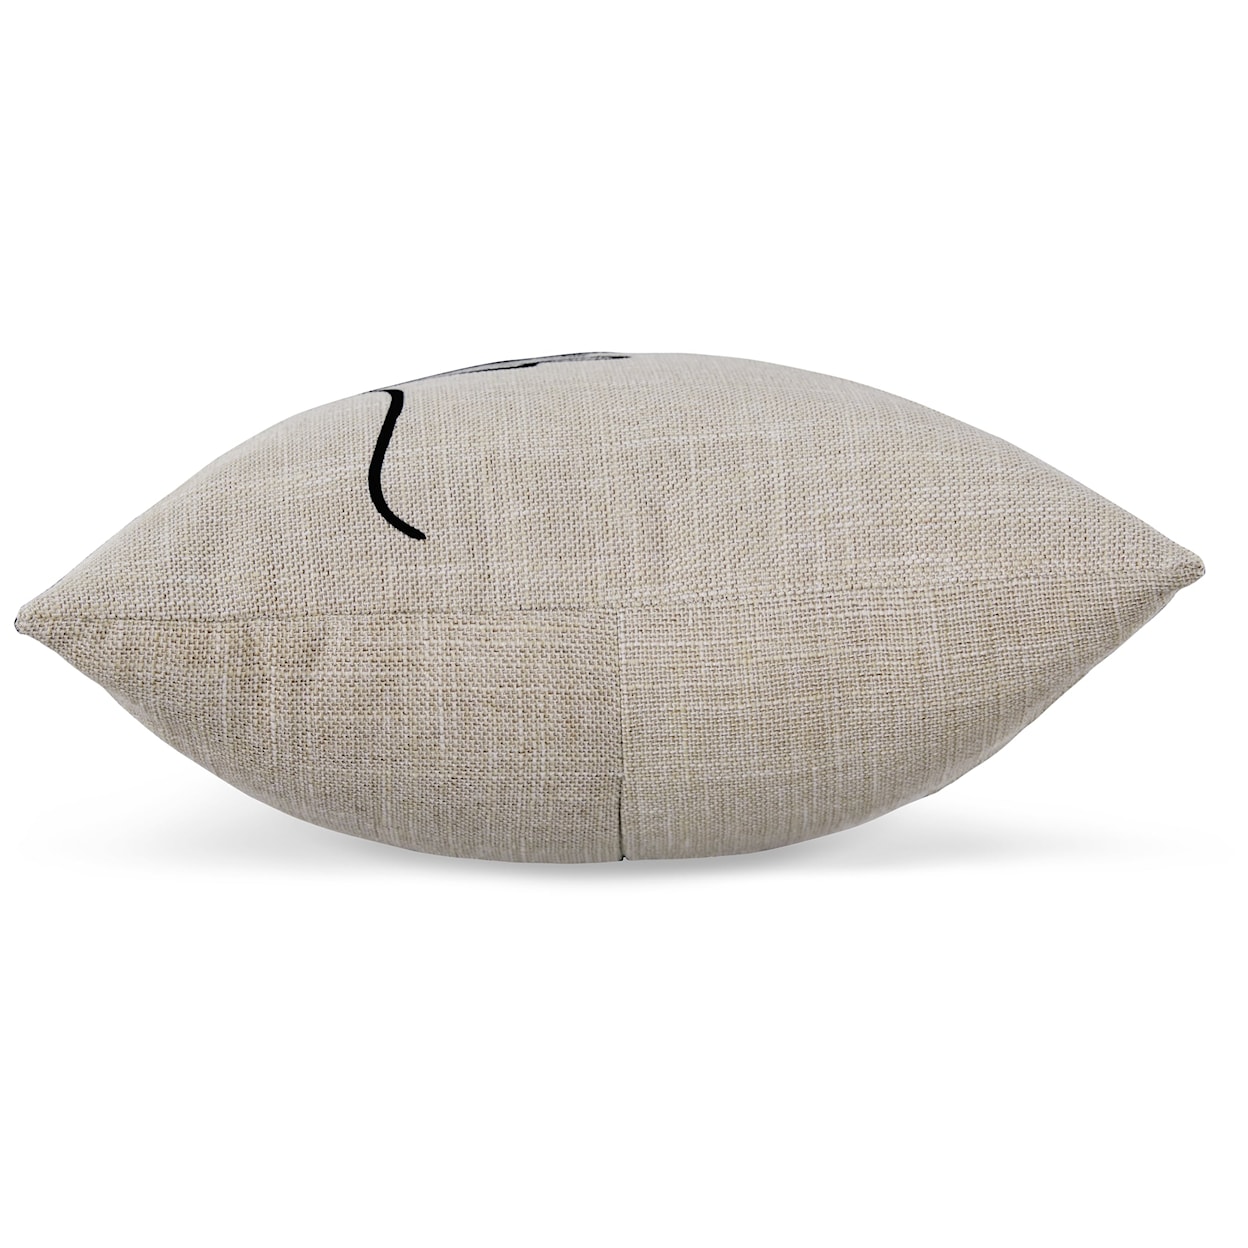 Ashley Furniture Signature Design Whisperich Pillow (Set of 4)